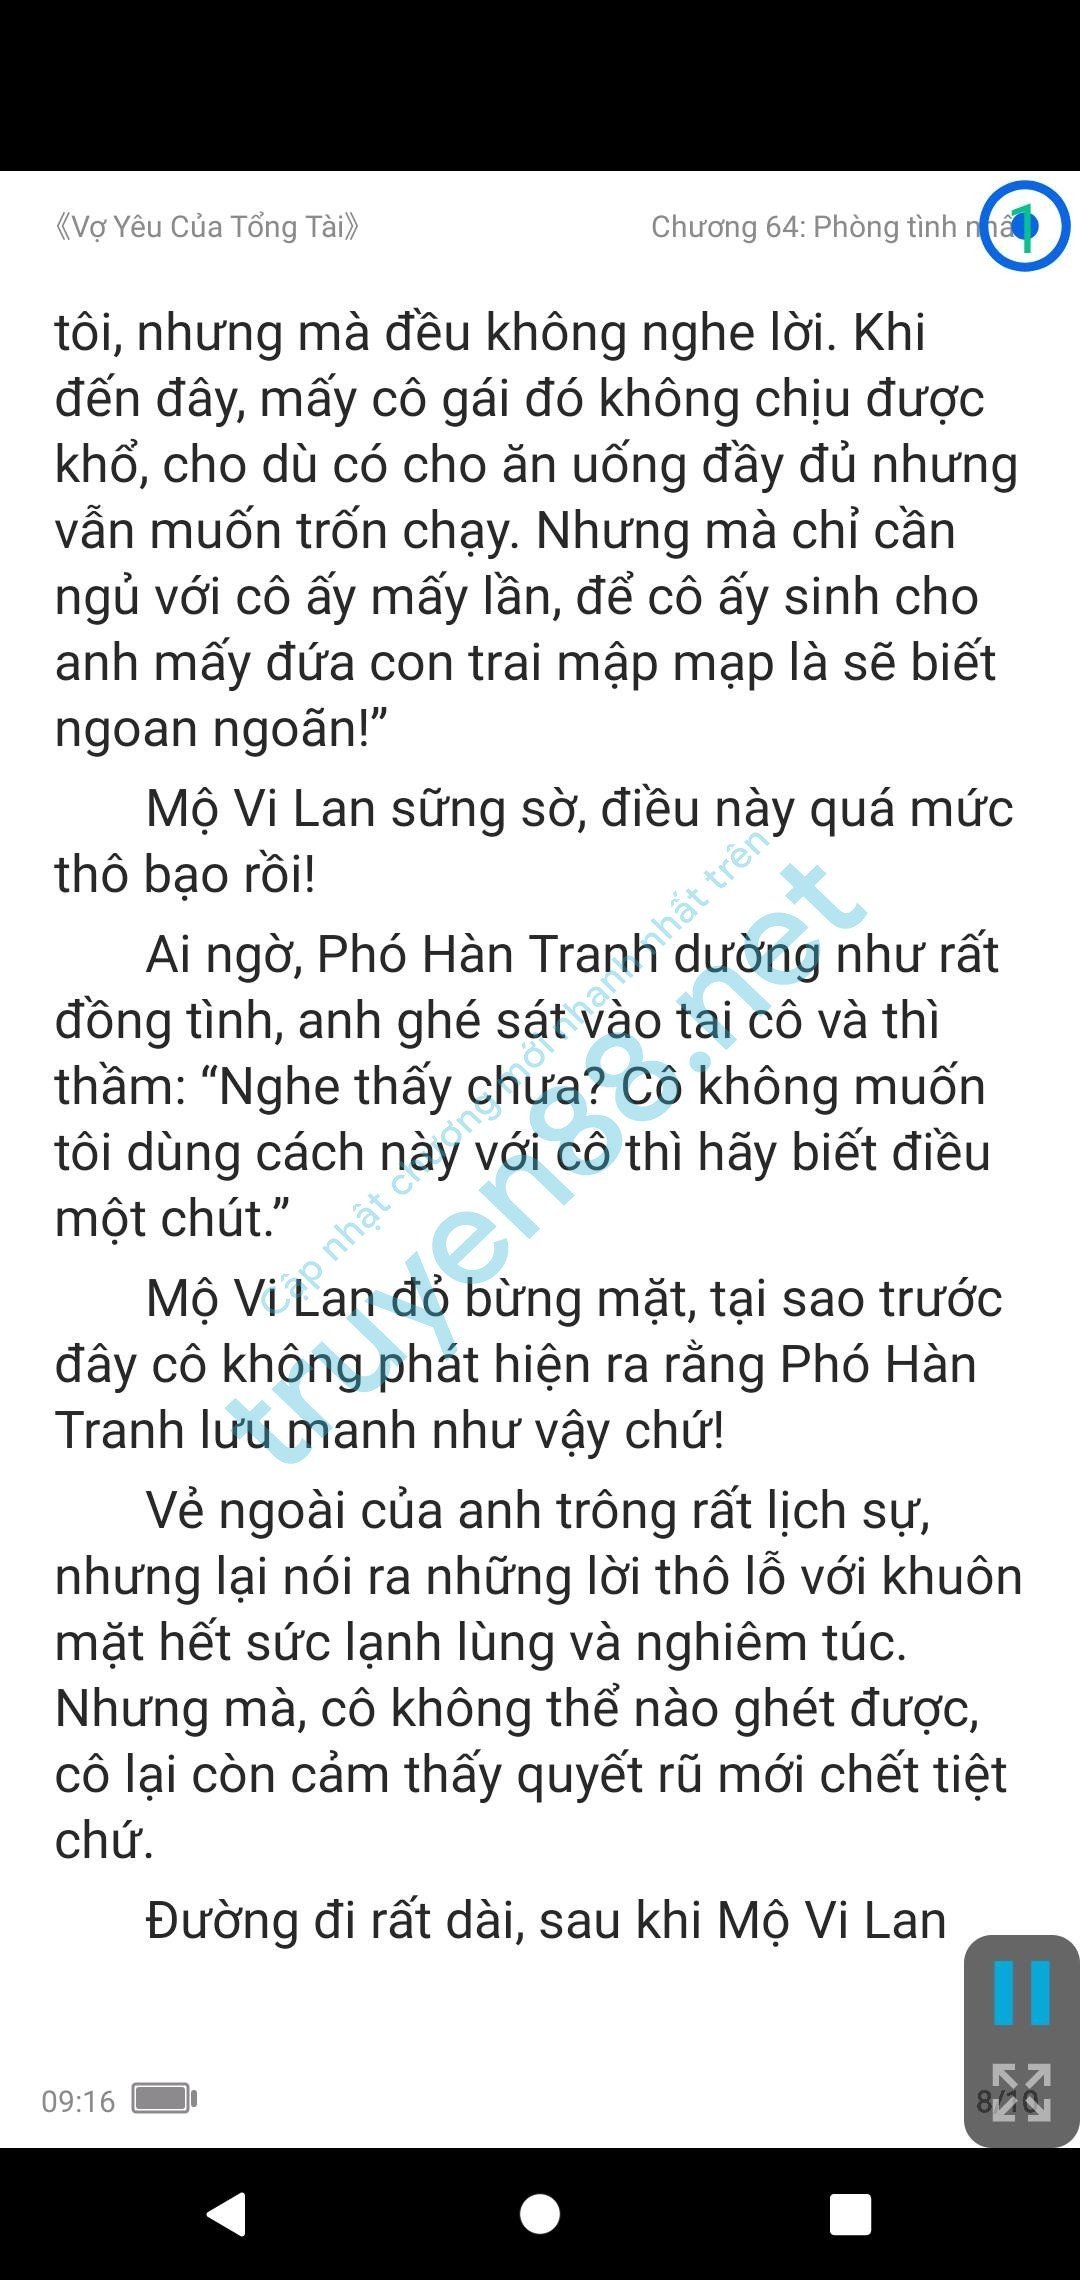 vo-yeu-cua-tong-tai-mo-vi-lan--pho-han-tranh-64-0